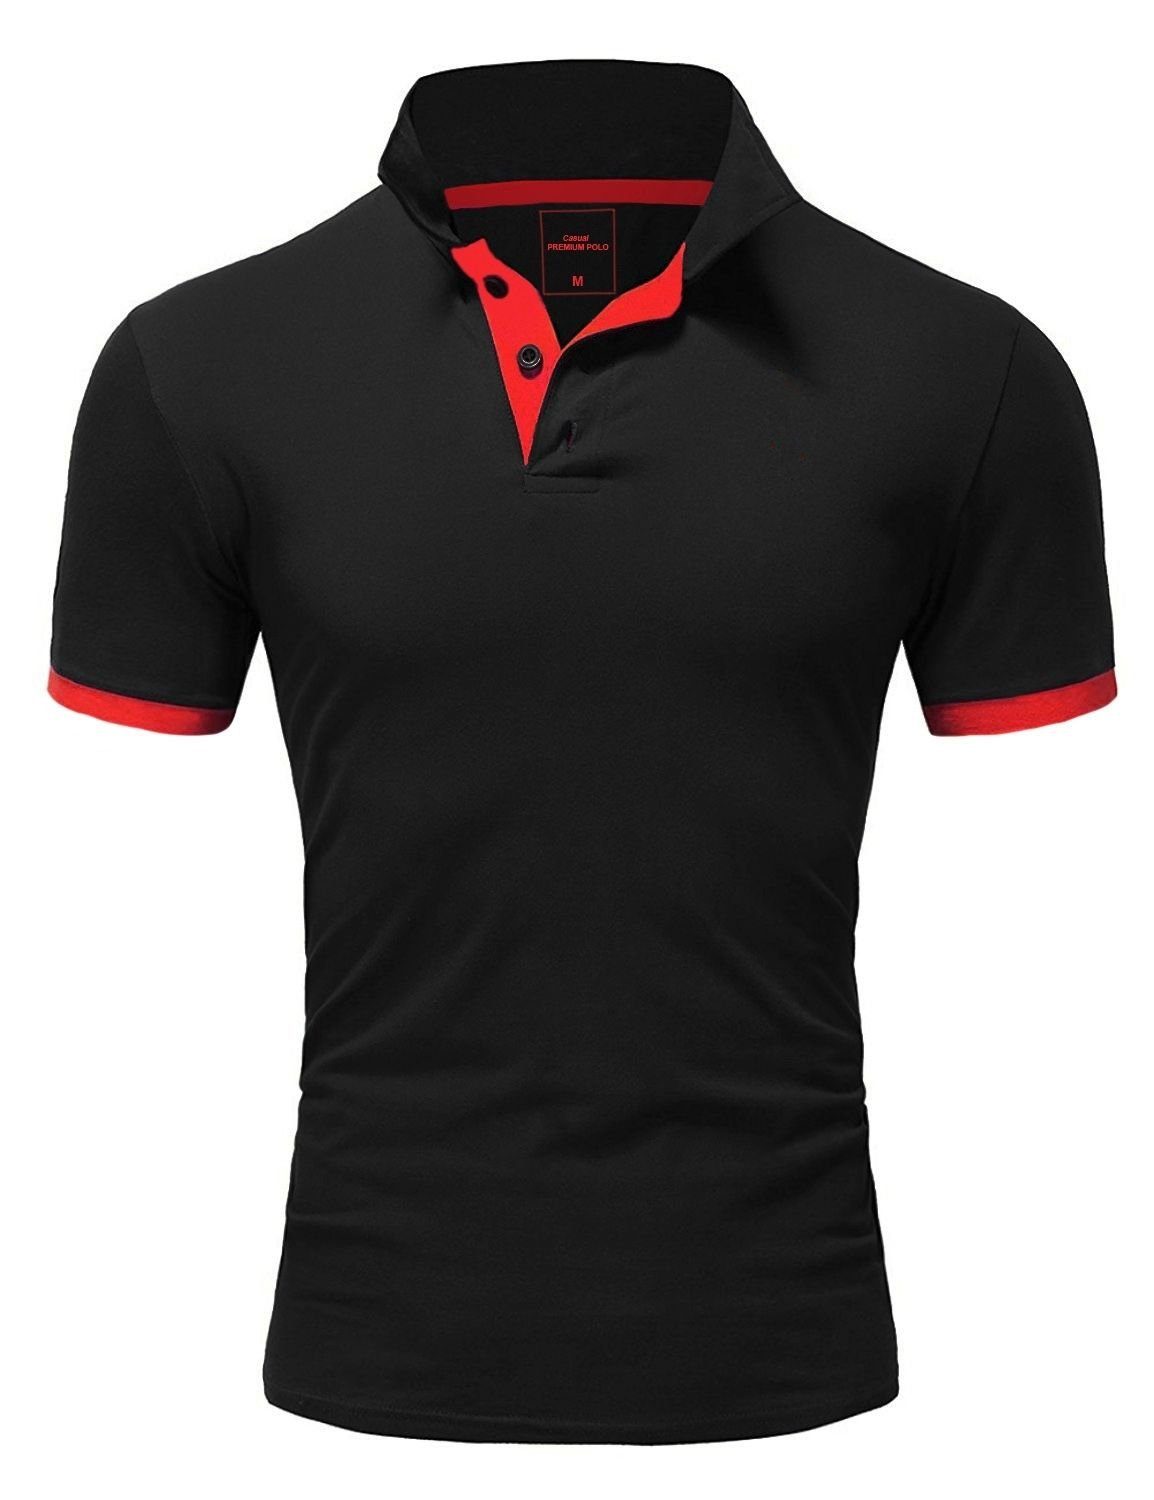 behype Poloshirt BASE mit Details kontrastfarbigen schwarz-rot